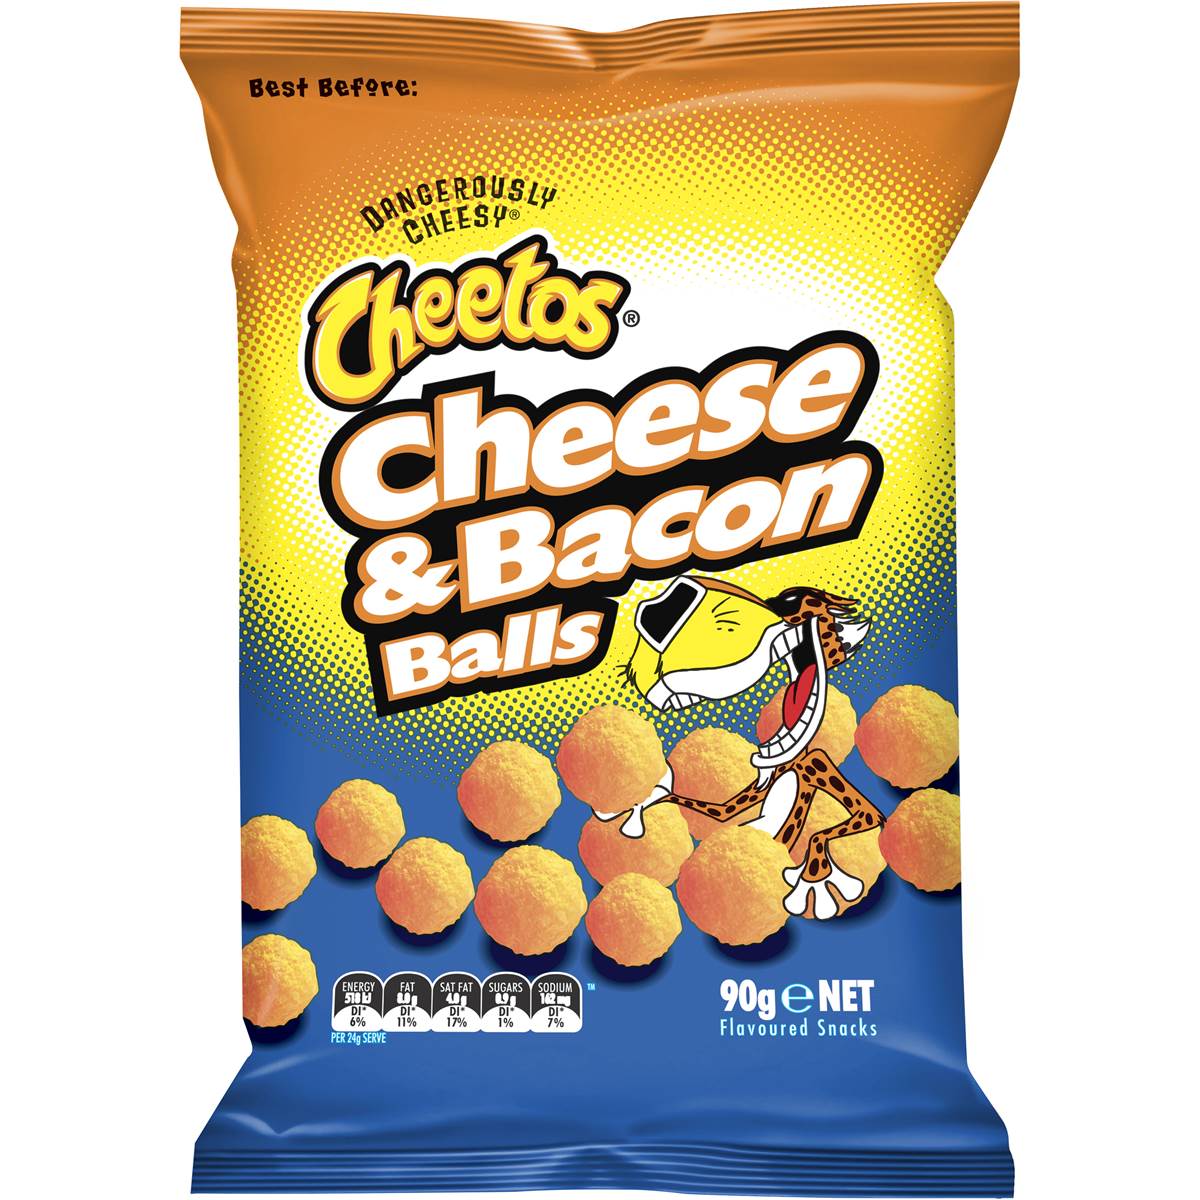 Cheetos Single Pack Cheese & Bacon Balls